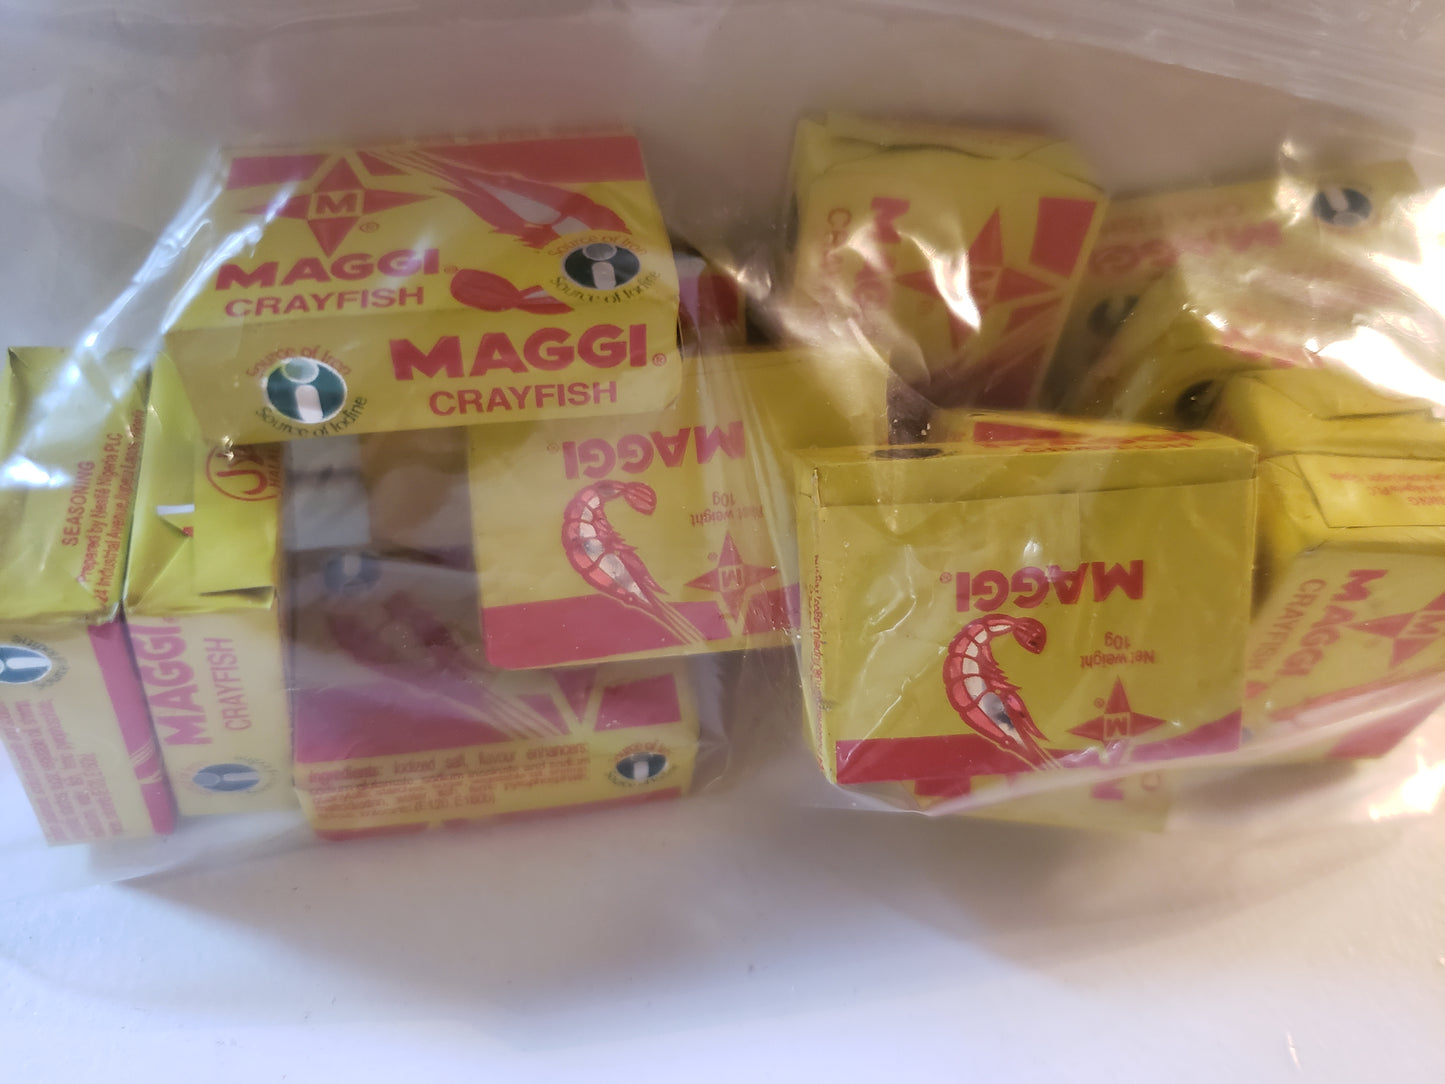 Maggi crayfish in small packs